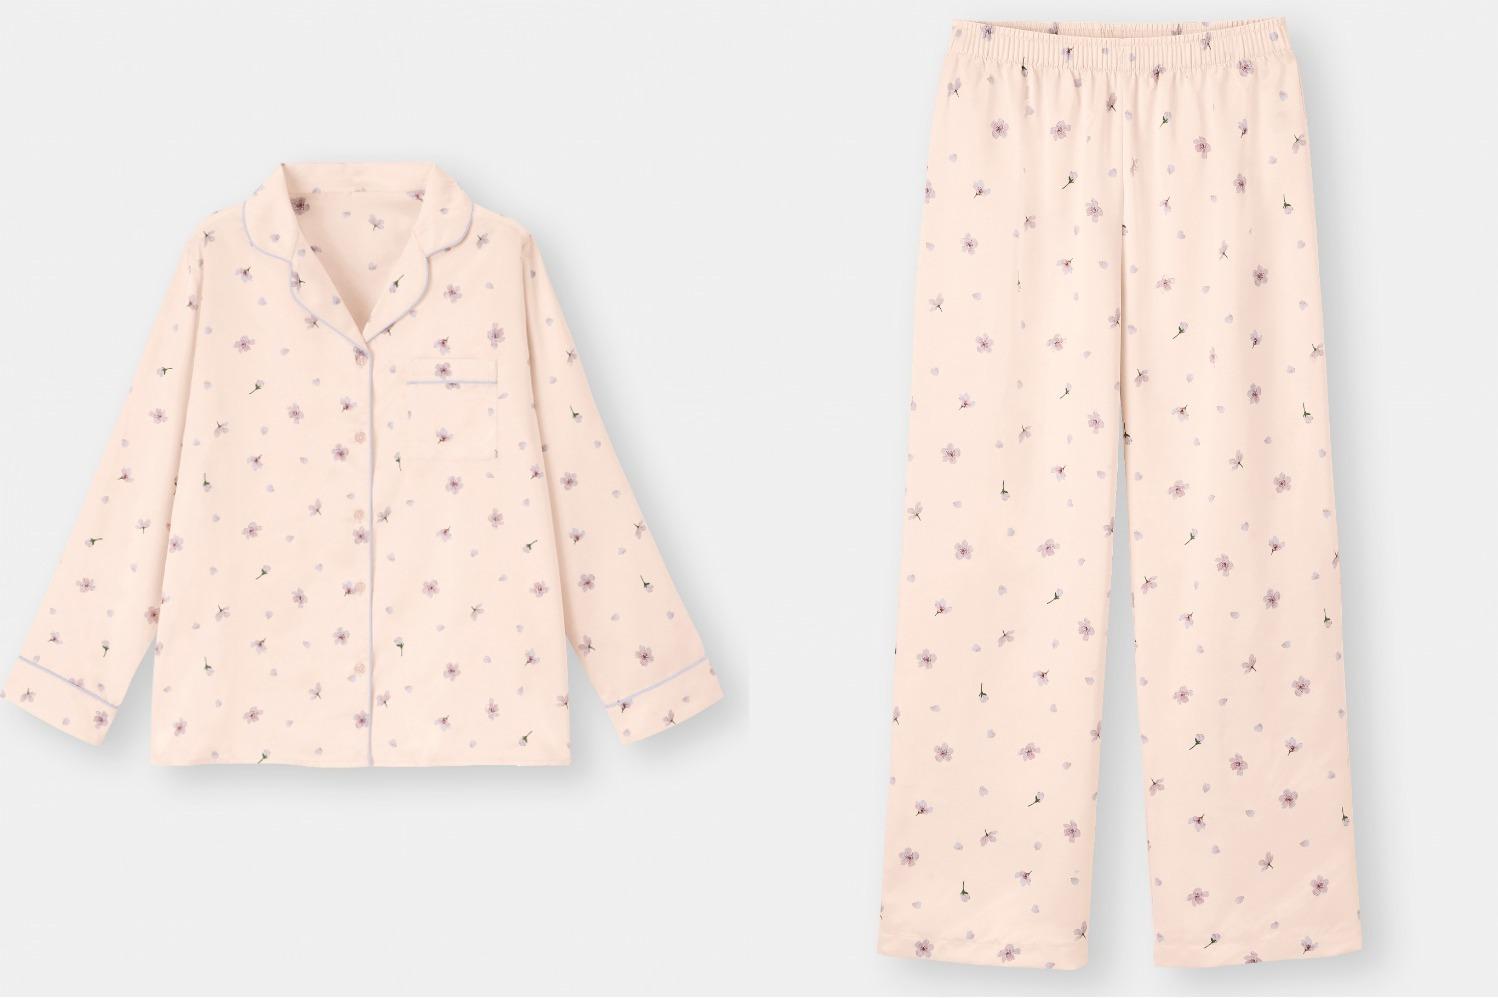 GU“桜”舞い散る2021年春ルームウェア、艶めくサテン生地のパジャマ&ワンピース 